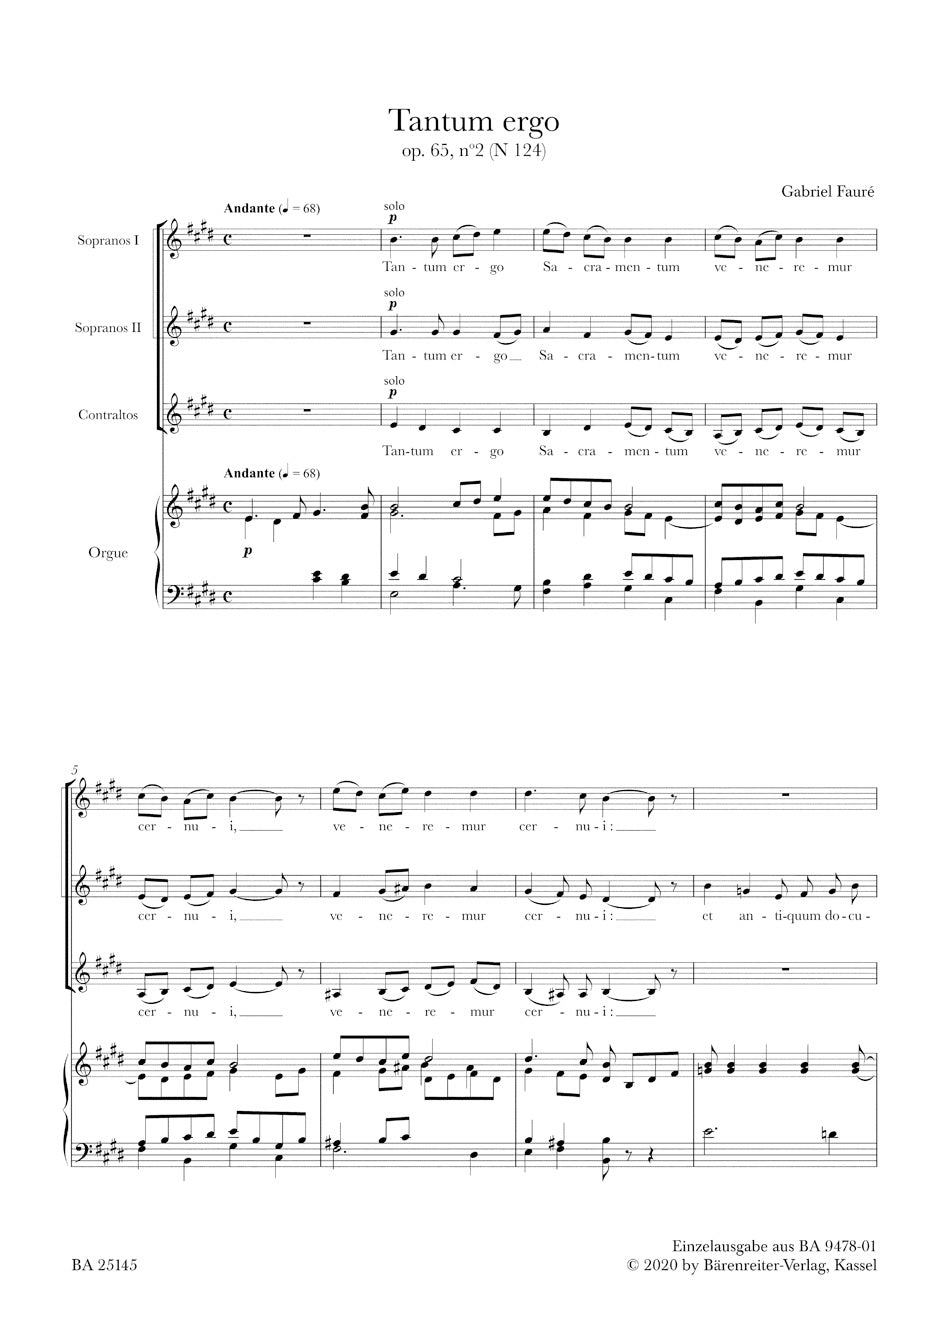 Fauré: Tantum ergo, Op. 65, No. 2, N 124